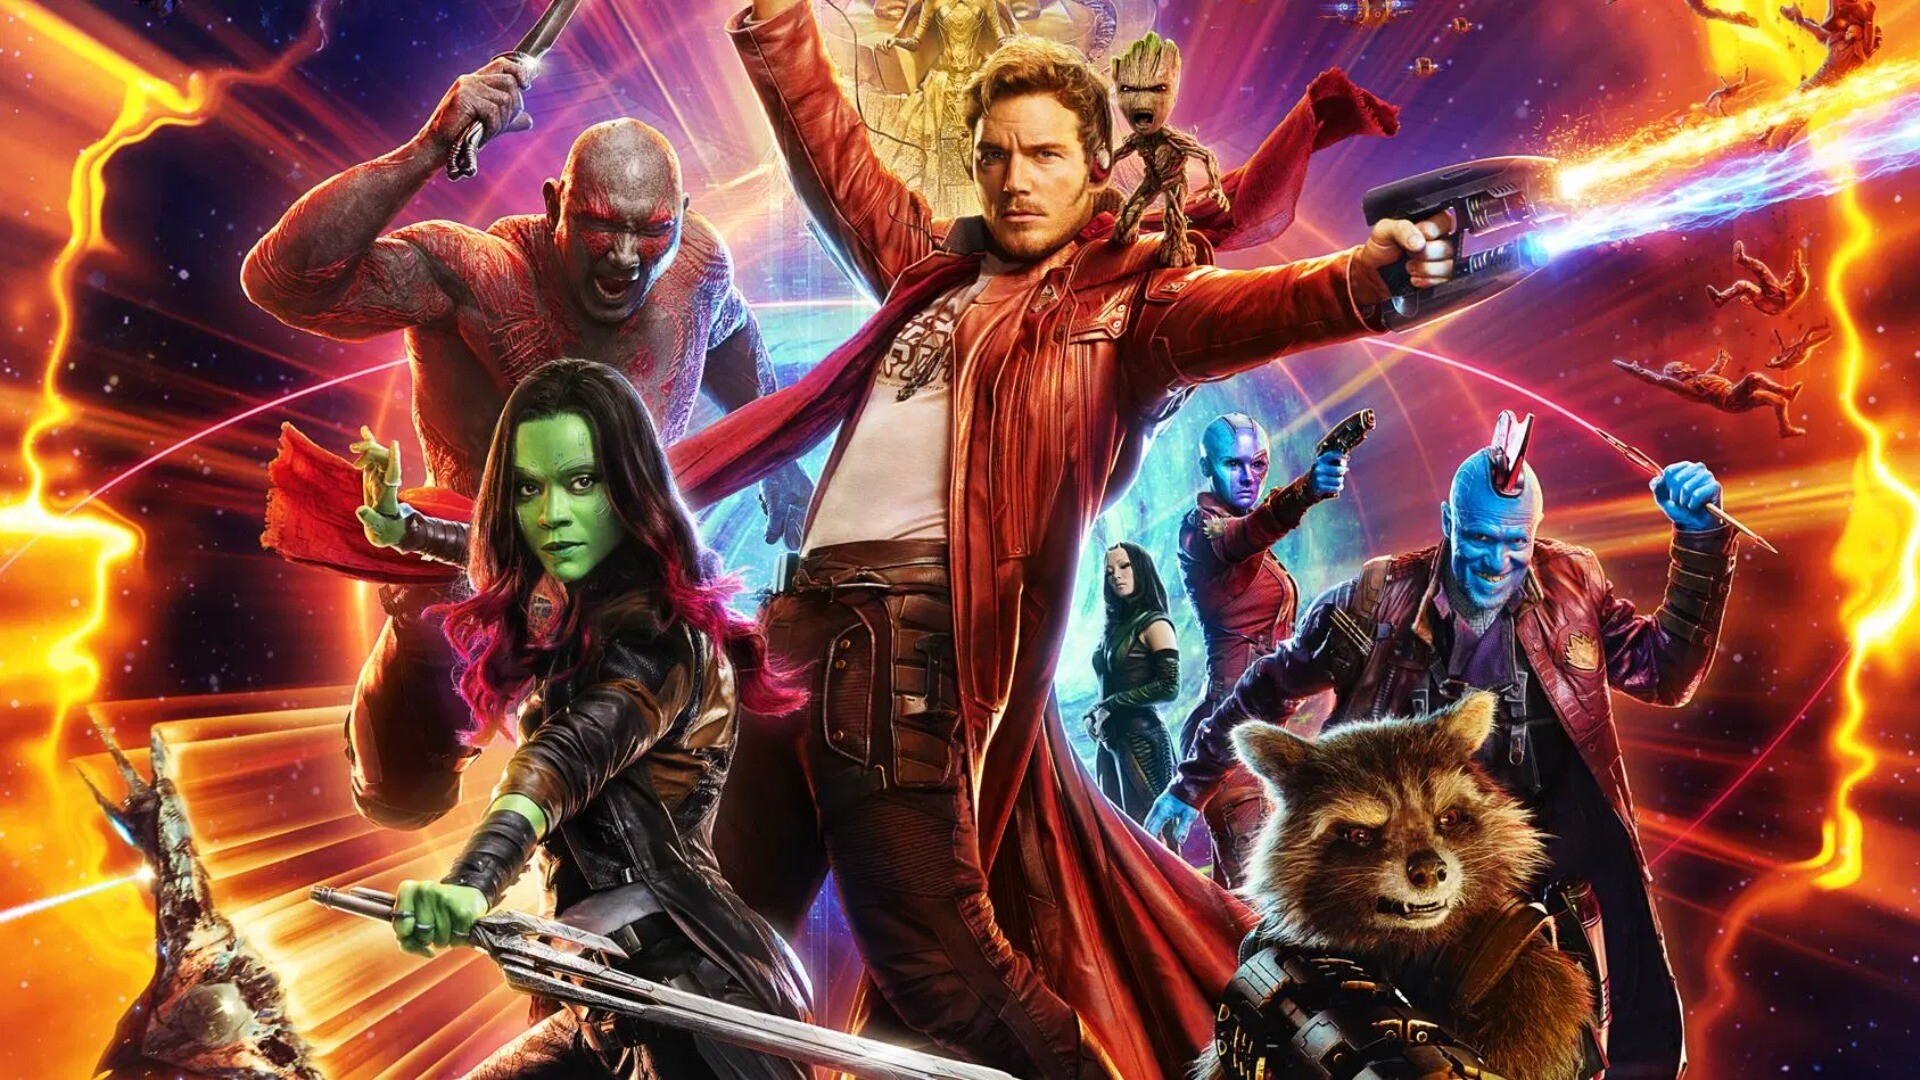 Pom Klementieff: Guardians of the Galaxy 3, James Gunn, Mantis, MCU, Bradley Cooper as Rocket, Michael Rooker as Yondu Udonta. 1920x1080 Full HD Wallpaper.